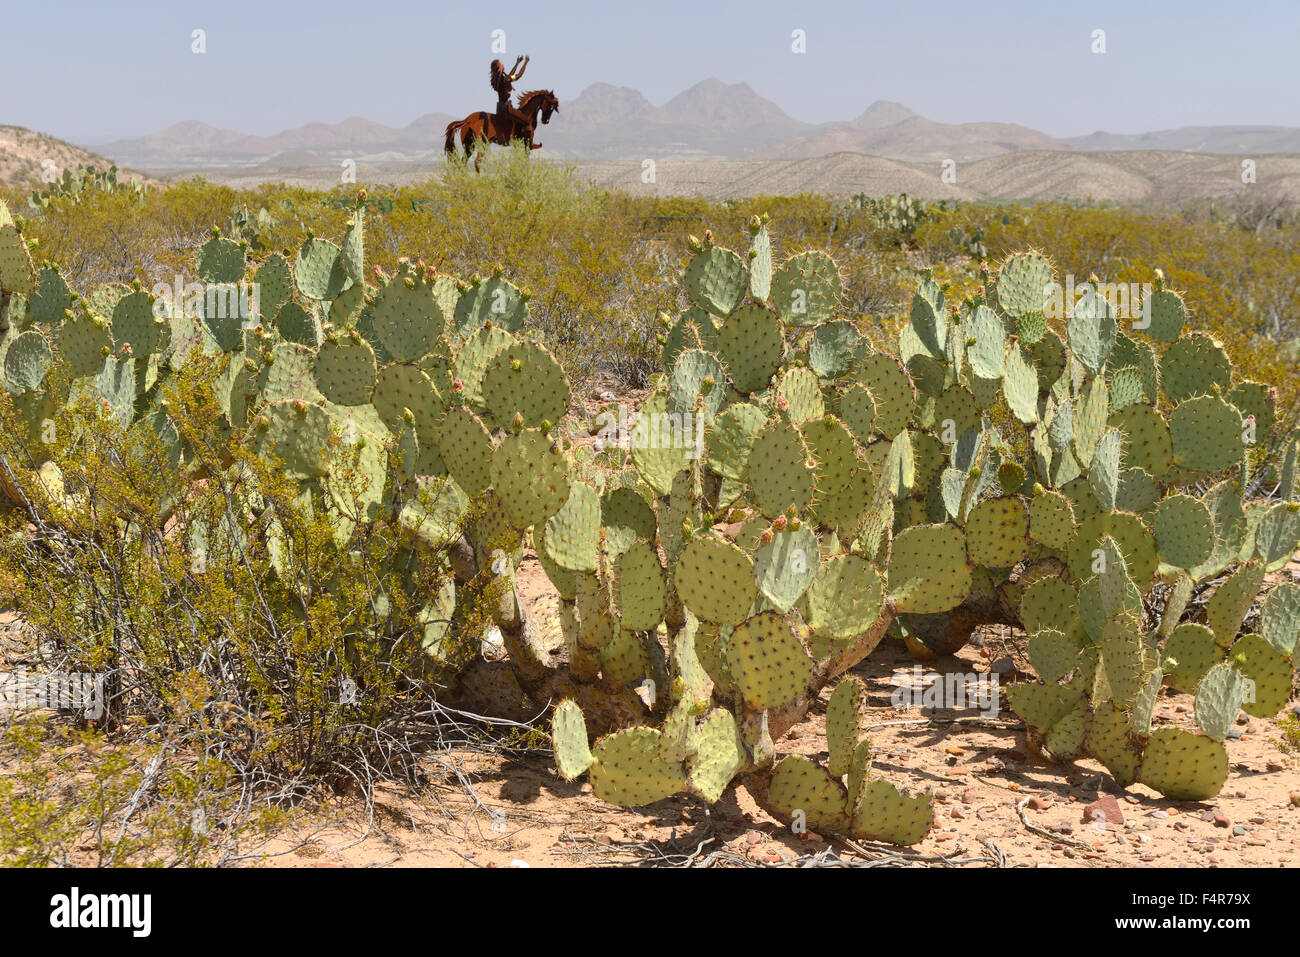 USA, United States, America, Southwest, Arizona, Apache, reservation, San Carlos, sculpture, rider, desert, landscape, prickly p Stock Photo